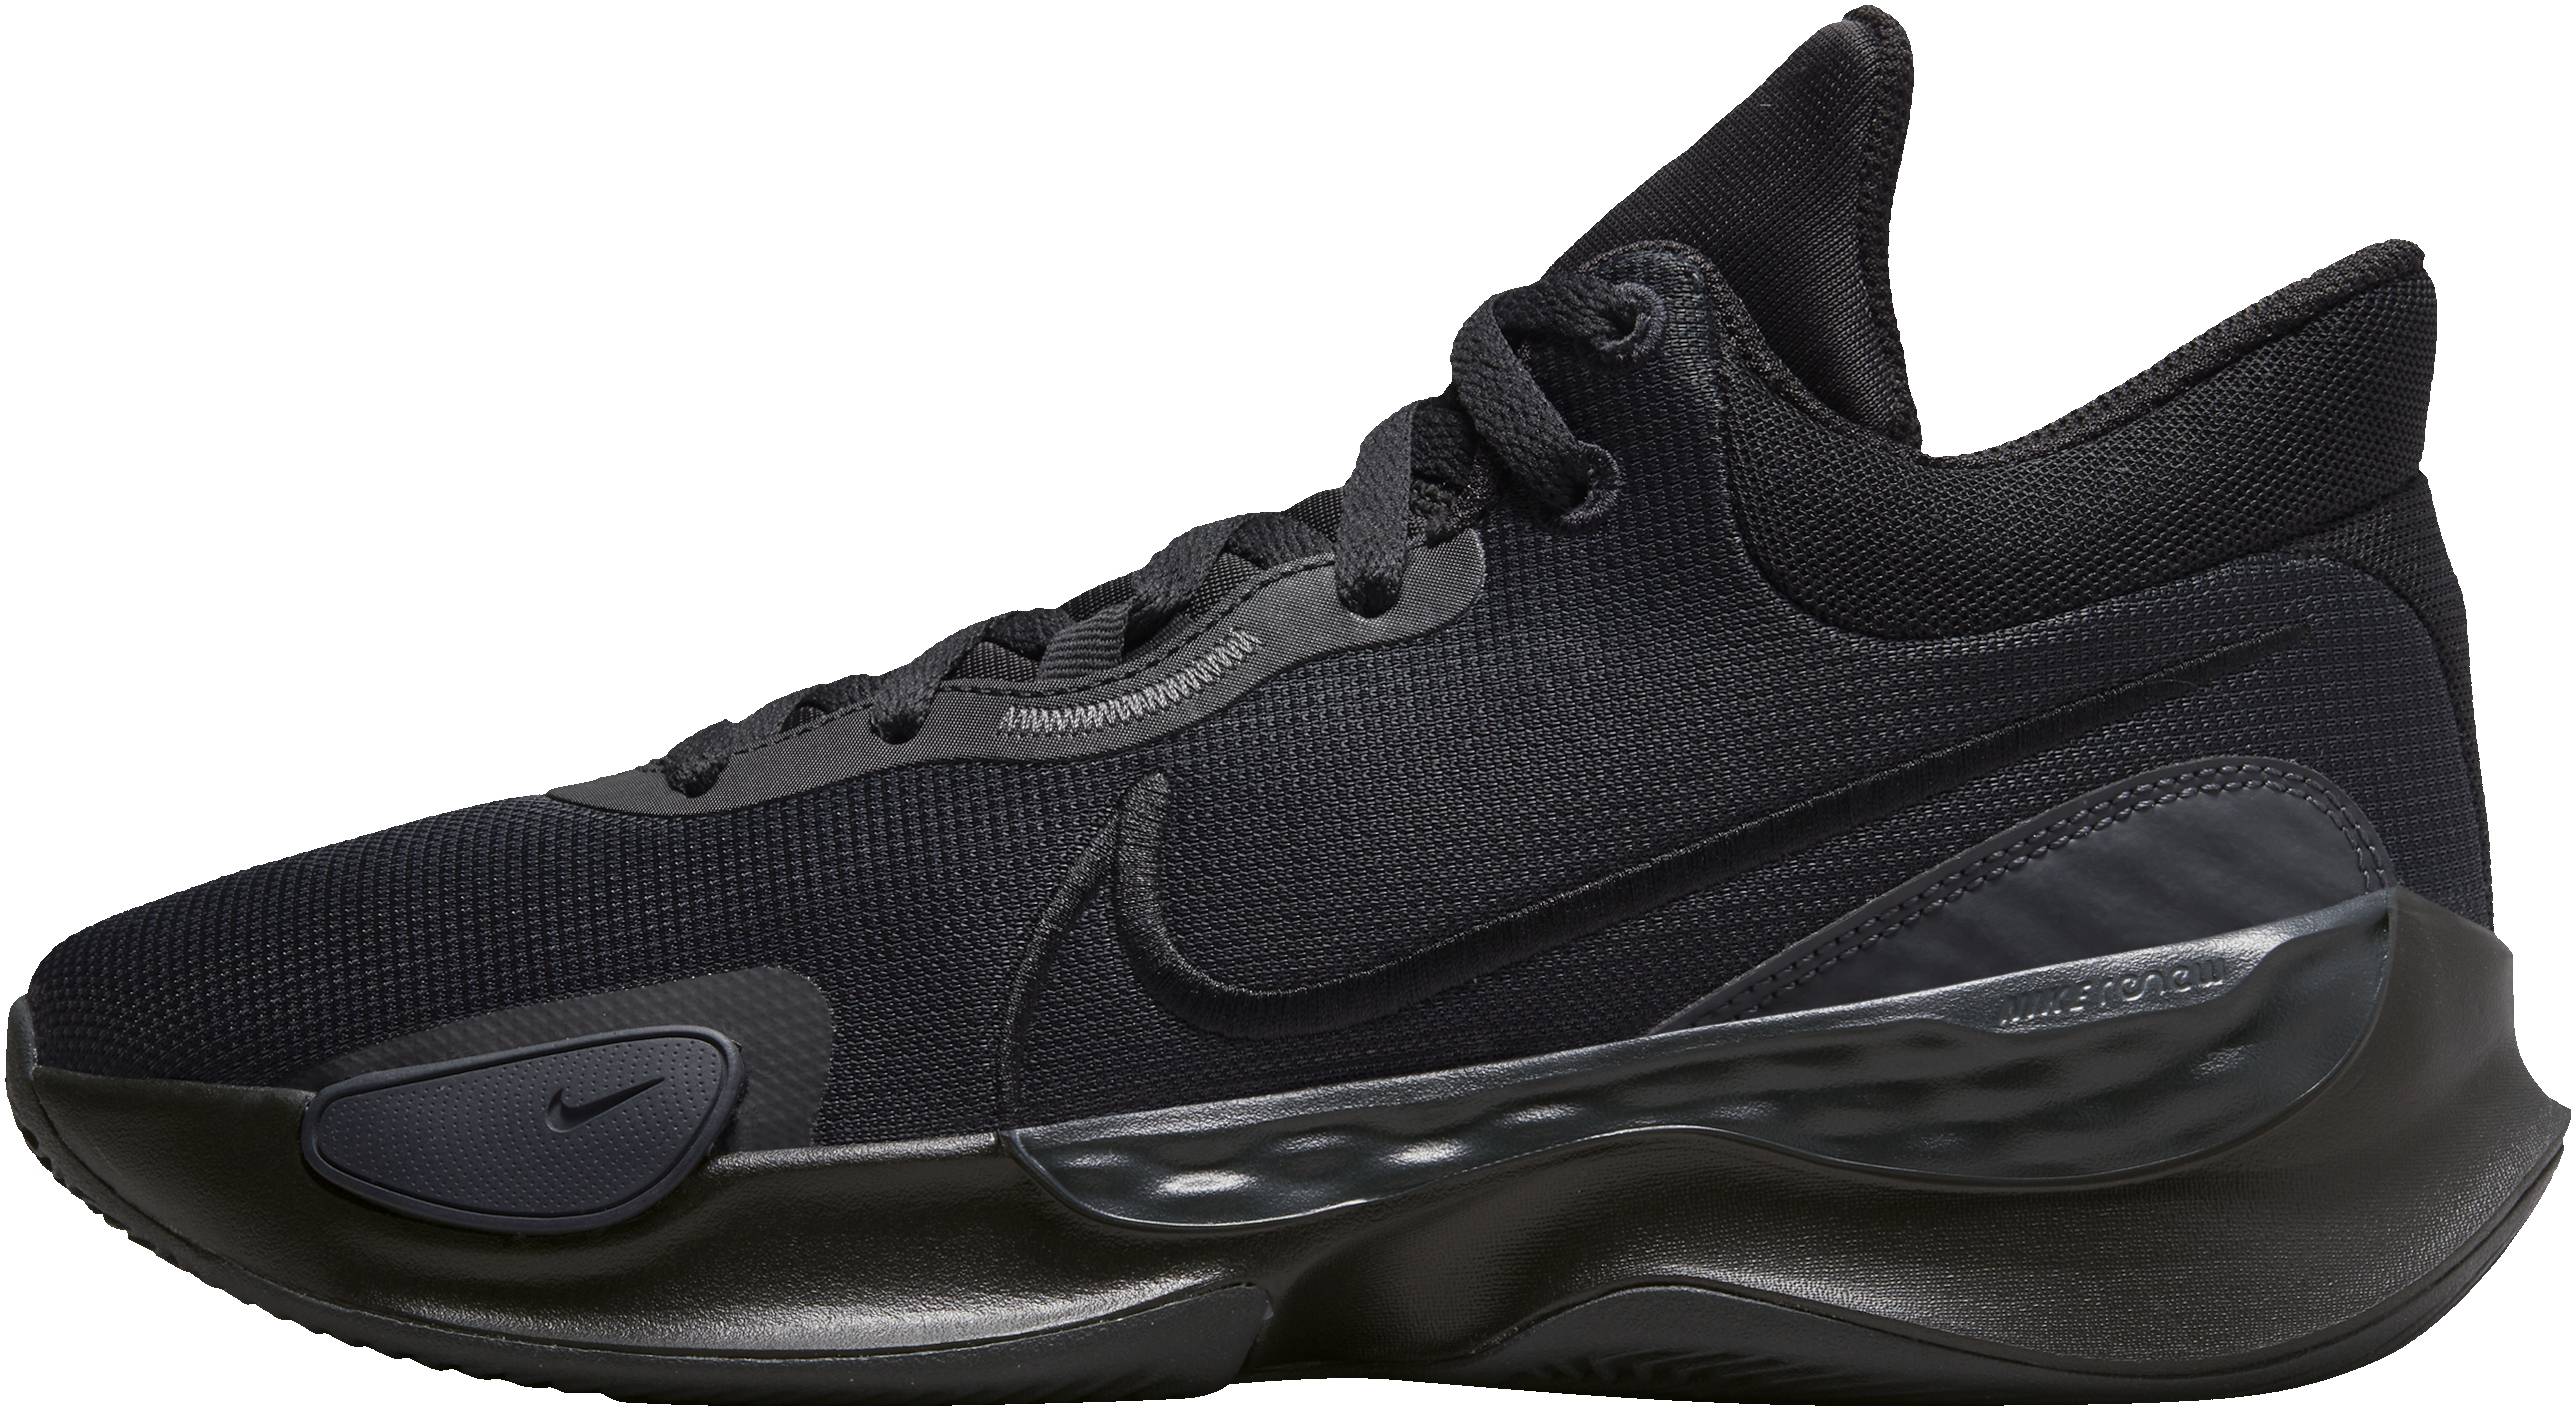 Buy Nike Men's Zoom KD 9 Black/Black Anthracite Basketball Shoe 8 Men US at